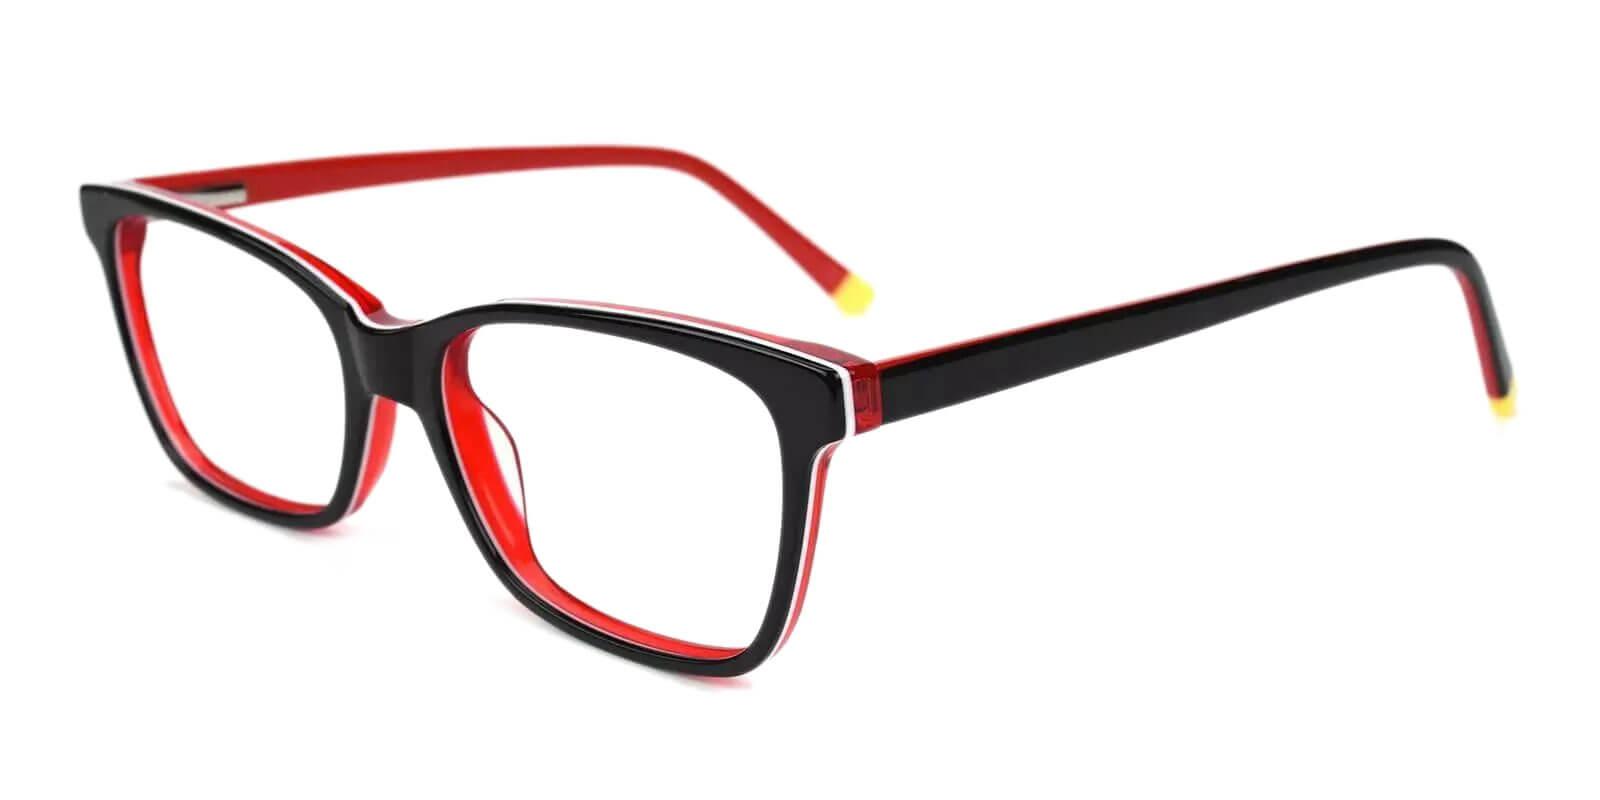 RingGold Red Acetate Eyeglasses , SpringHinges , UniversalBridgeFit Frames from ABBE Glasses